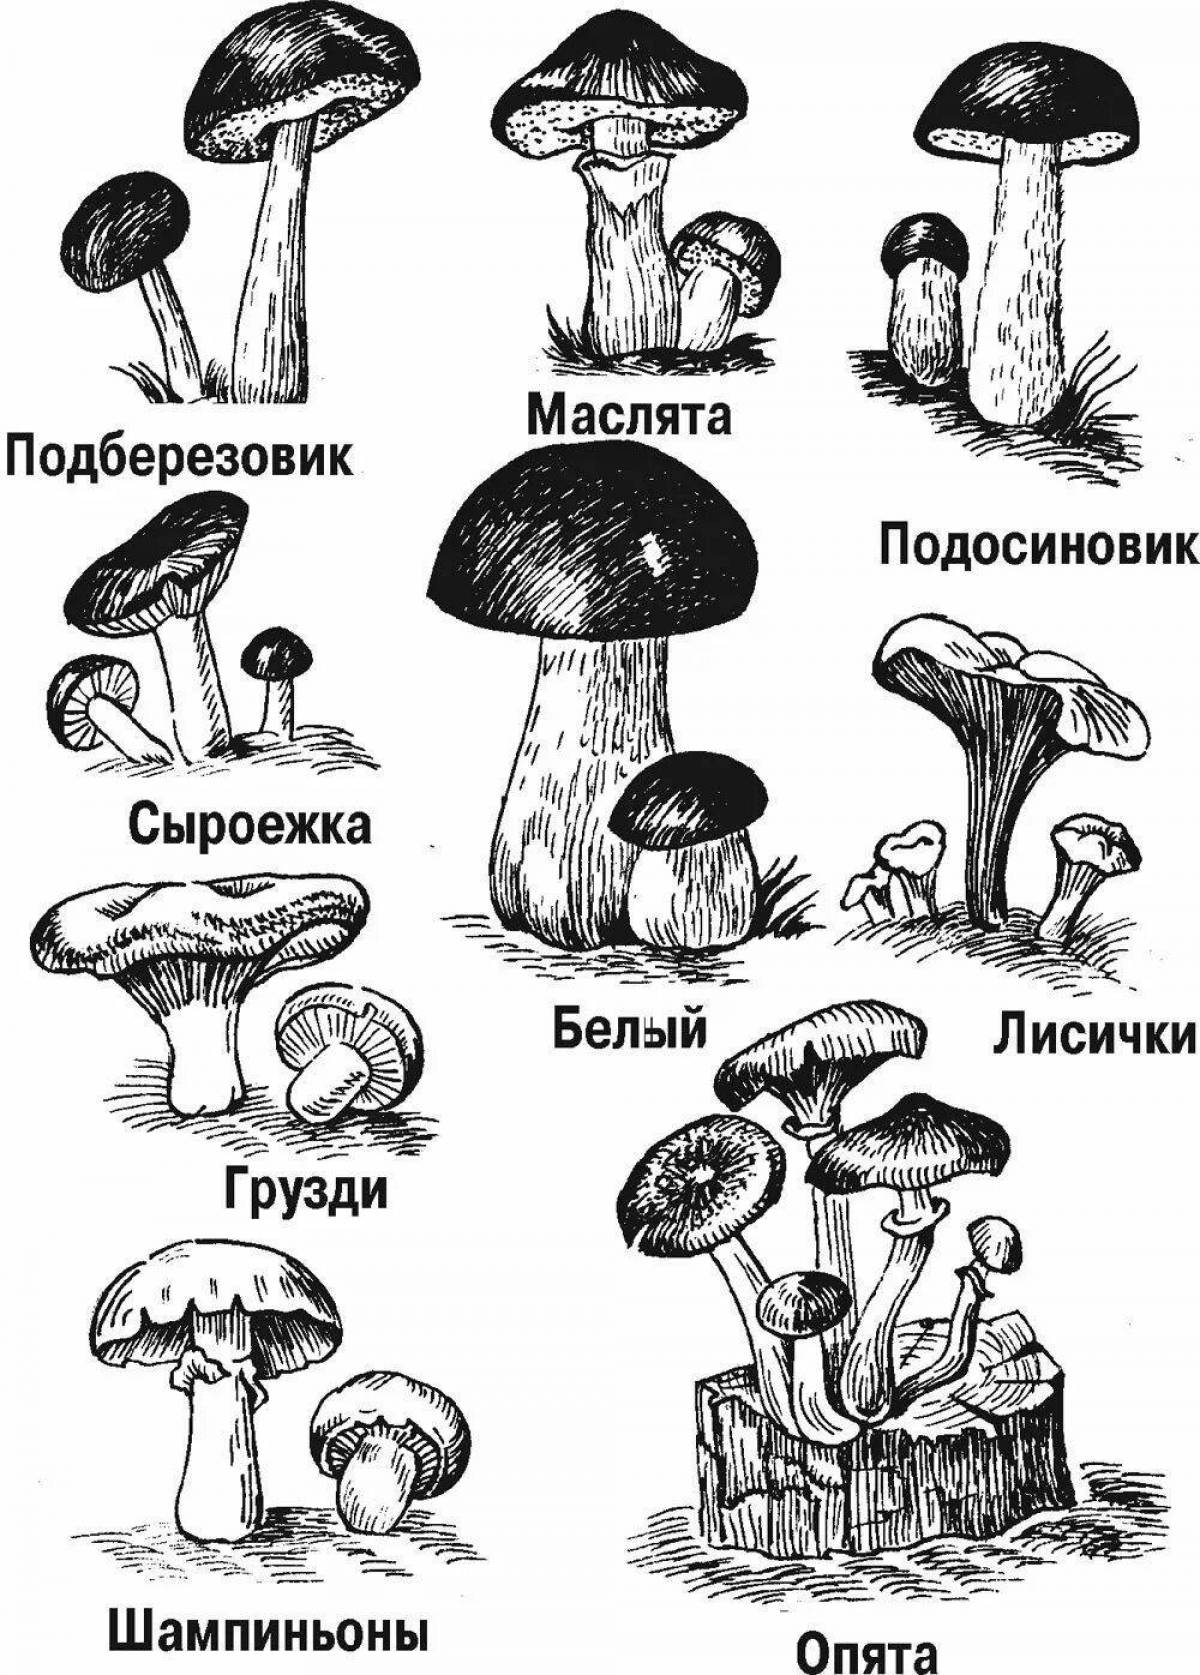 Inedible mushrooms for children